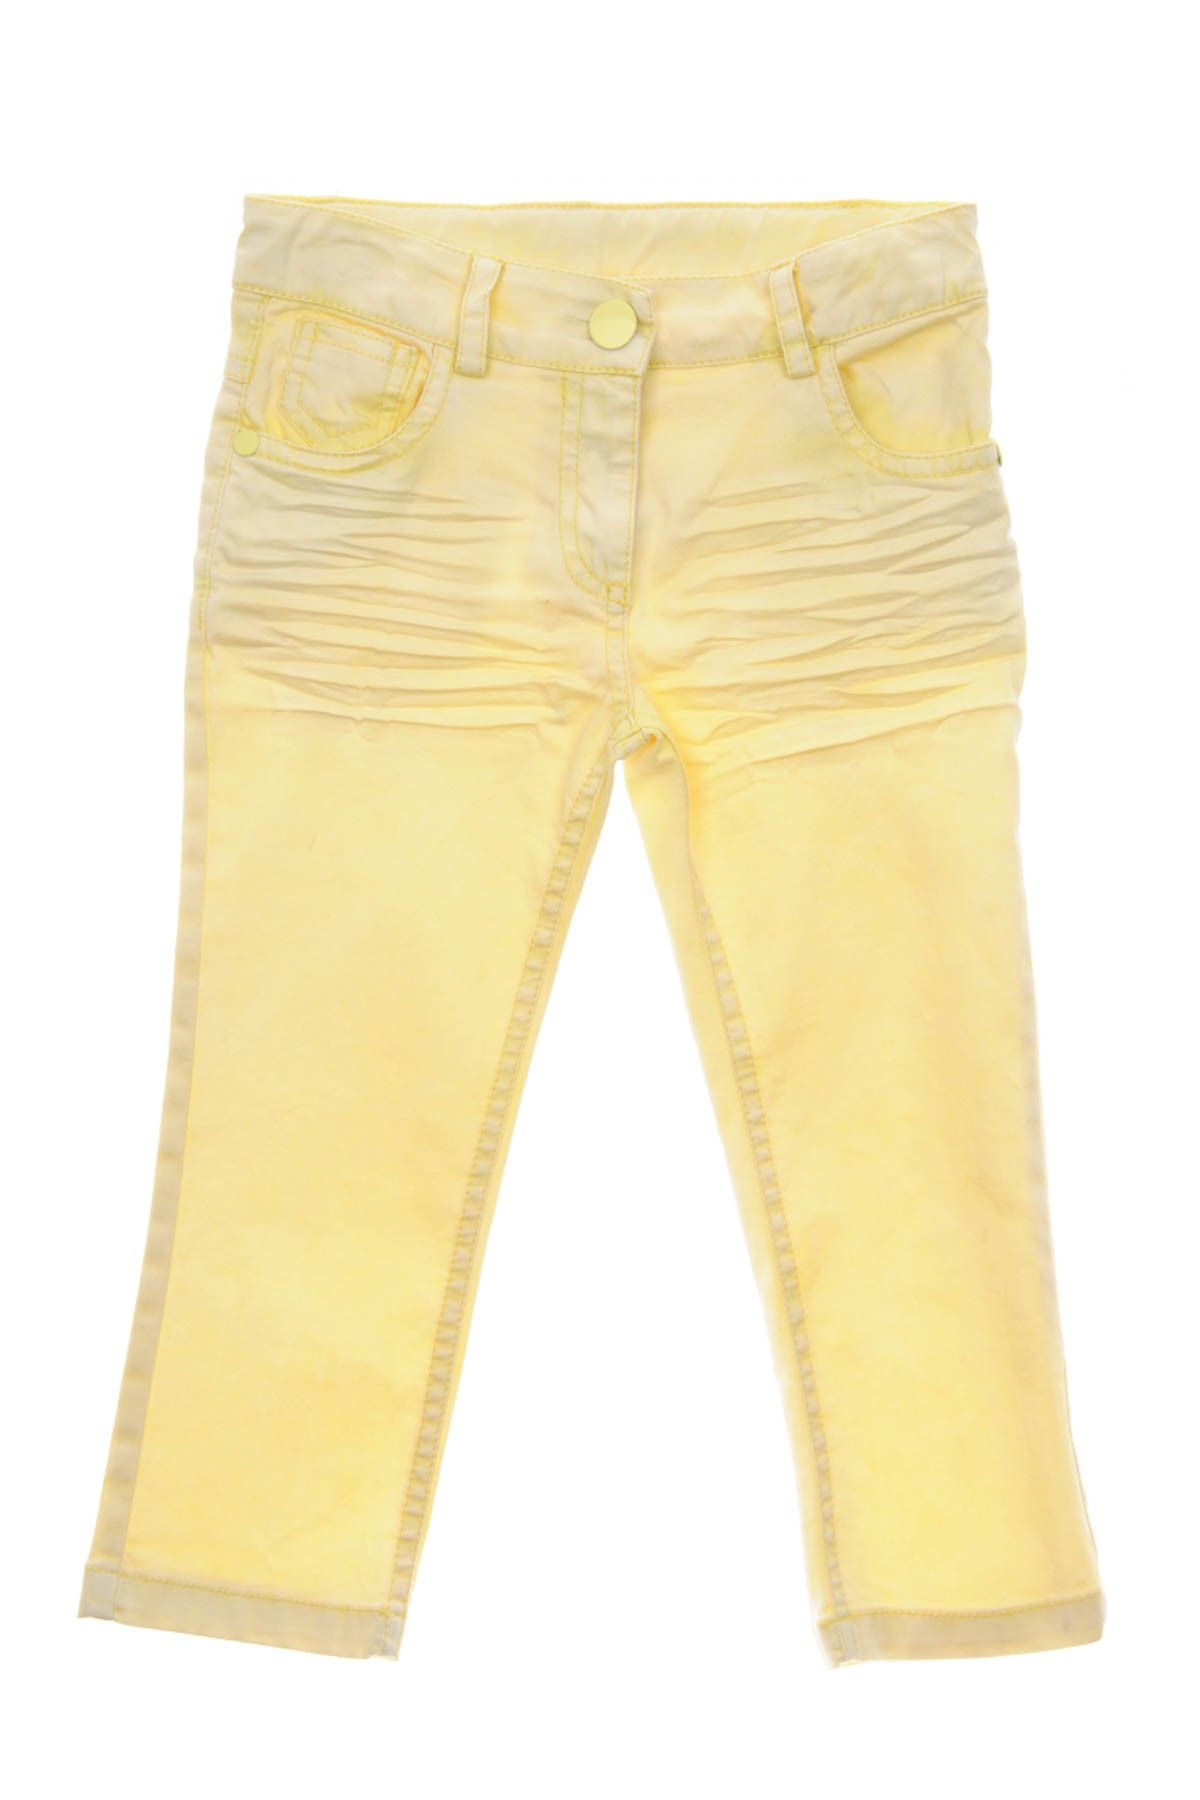 Panço Sarı Kız Çocuk Pantolon 1612155100